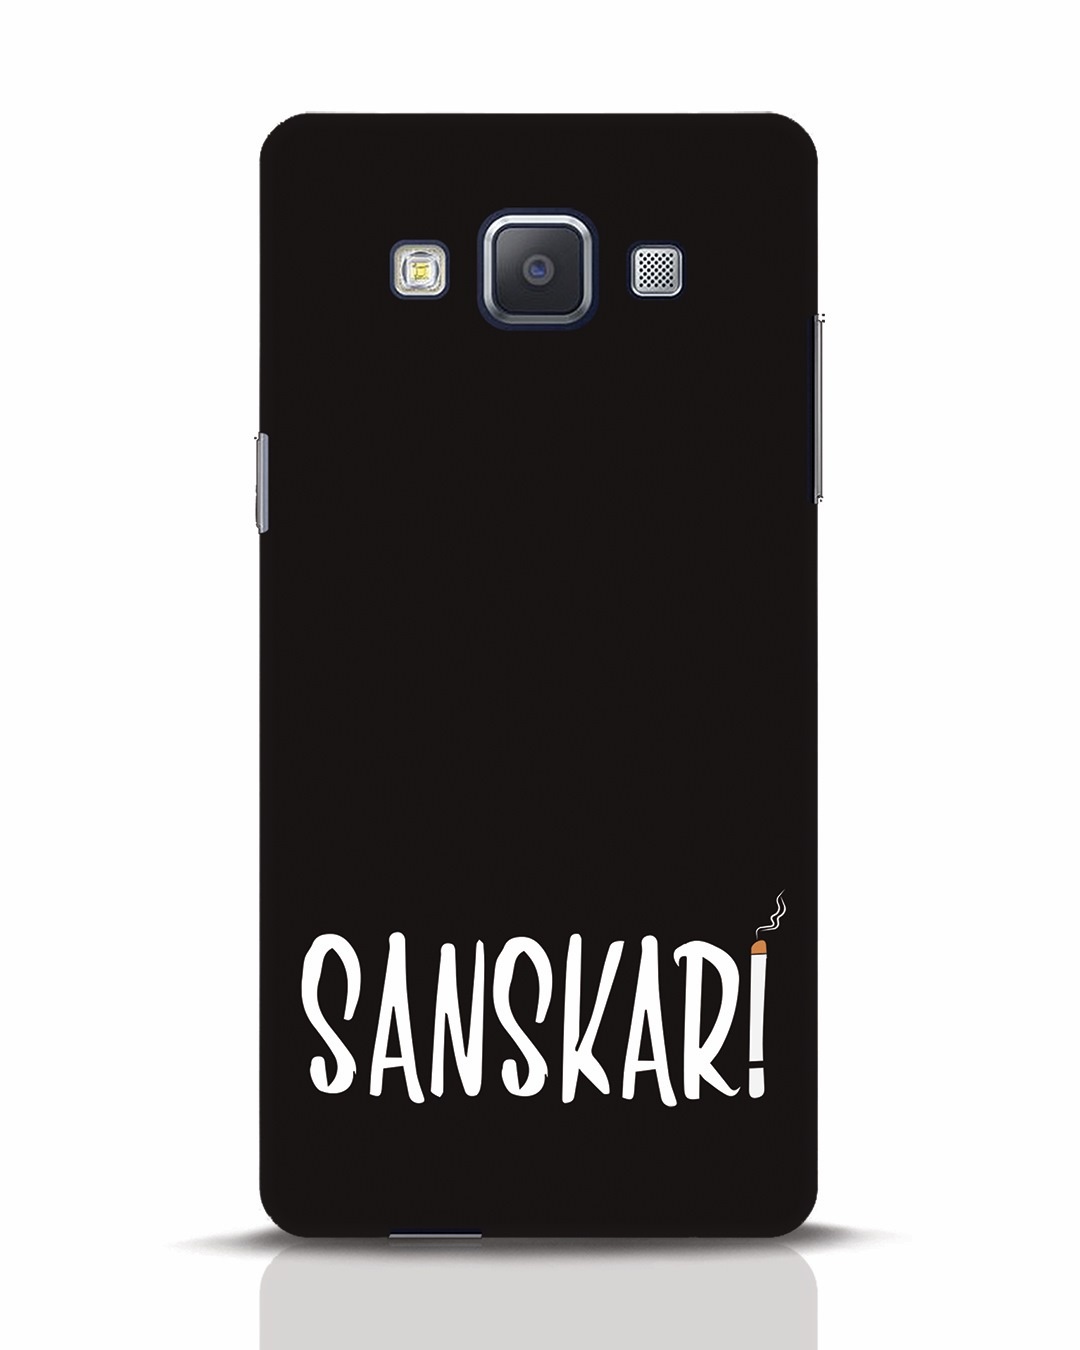 Sanskari Samsung Galaxy A5 Mobile Cover  Samsung Galaxy A5 Mobile Covers Bewakoof.com